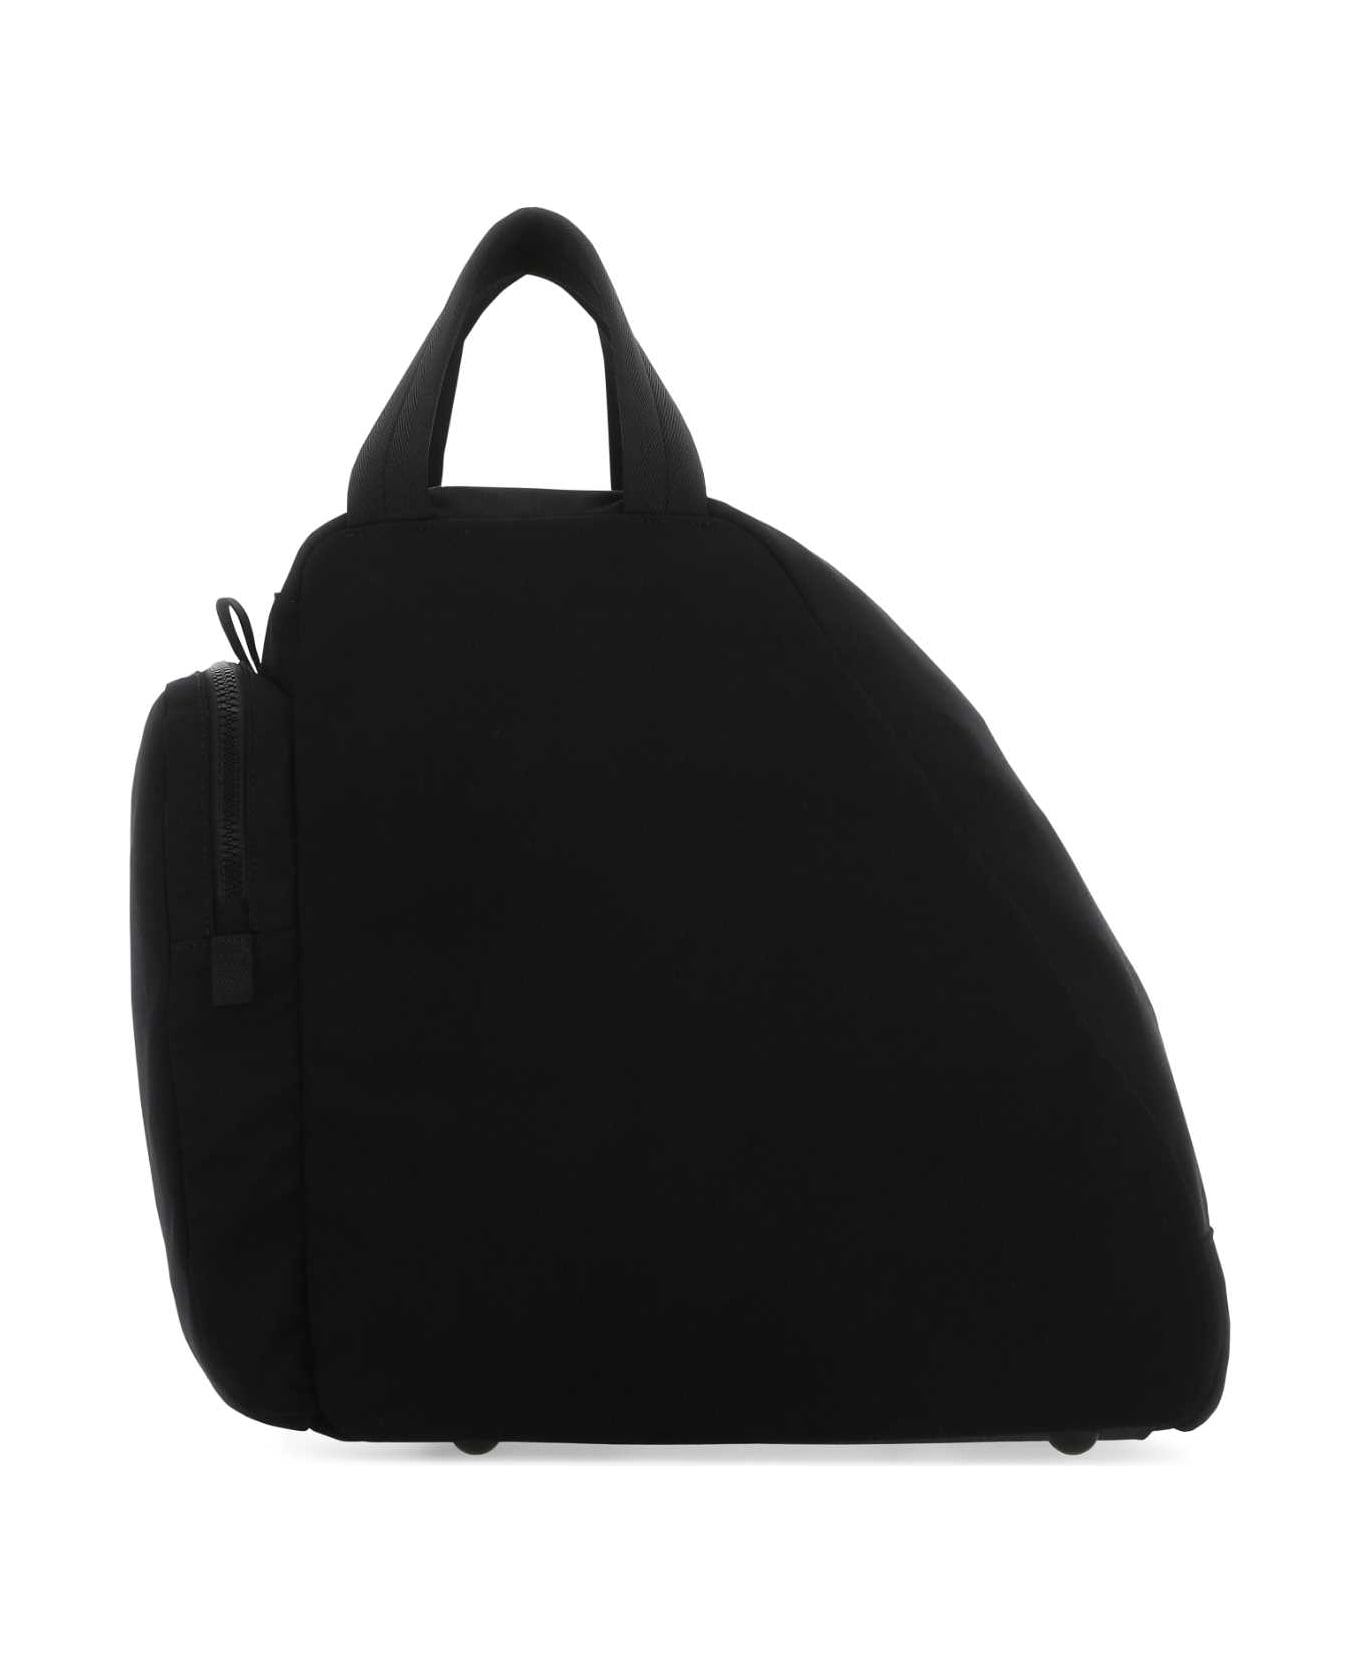 Prada Black Canvas Travel Bag - NERO トラベルバッグ